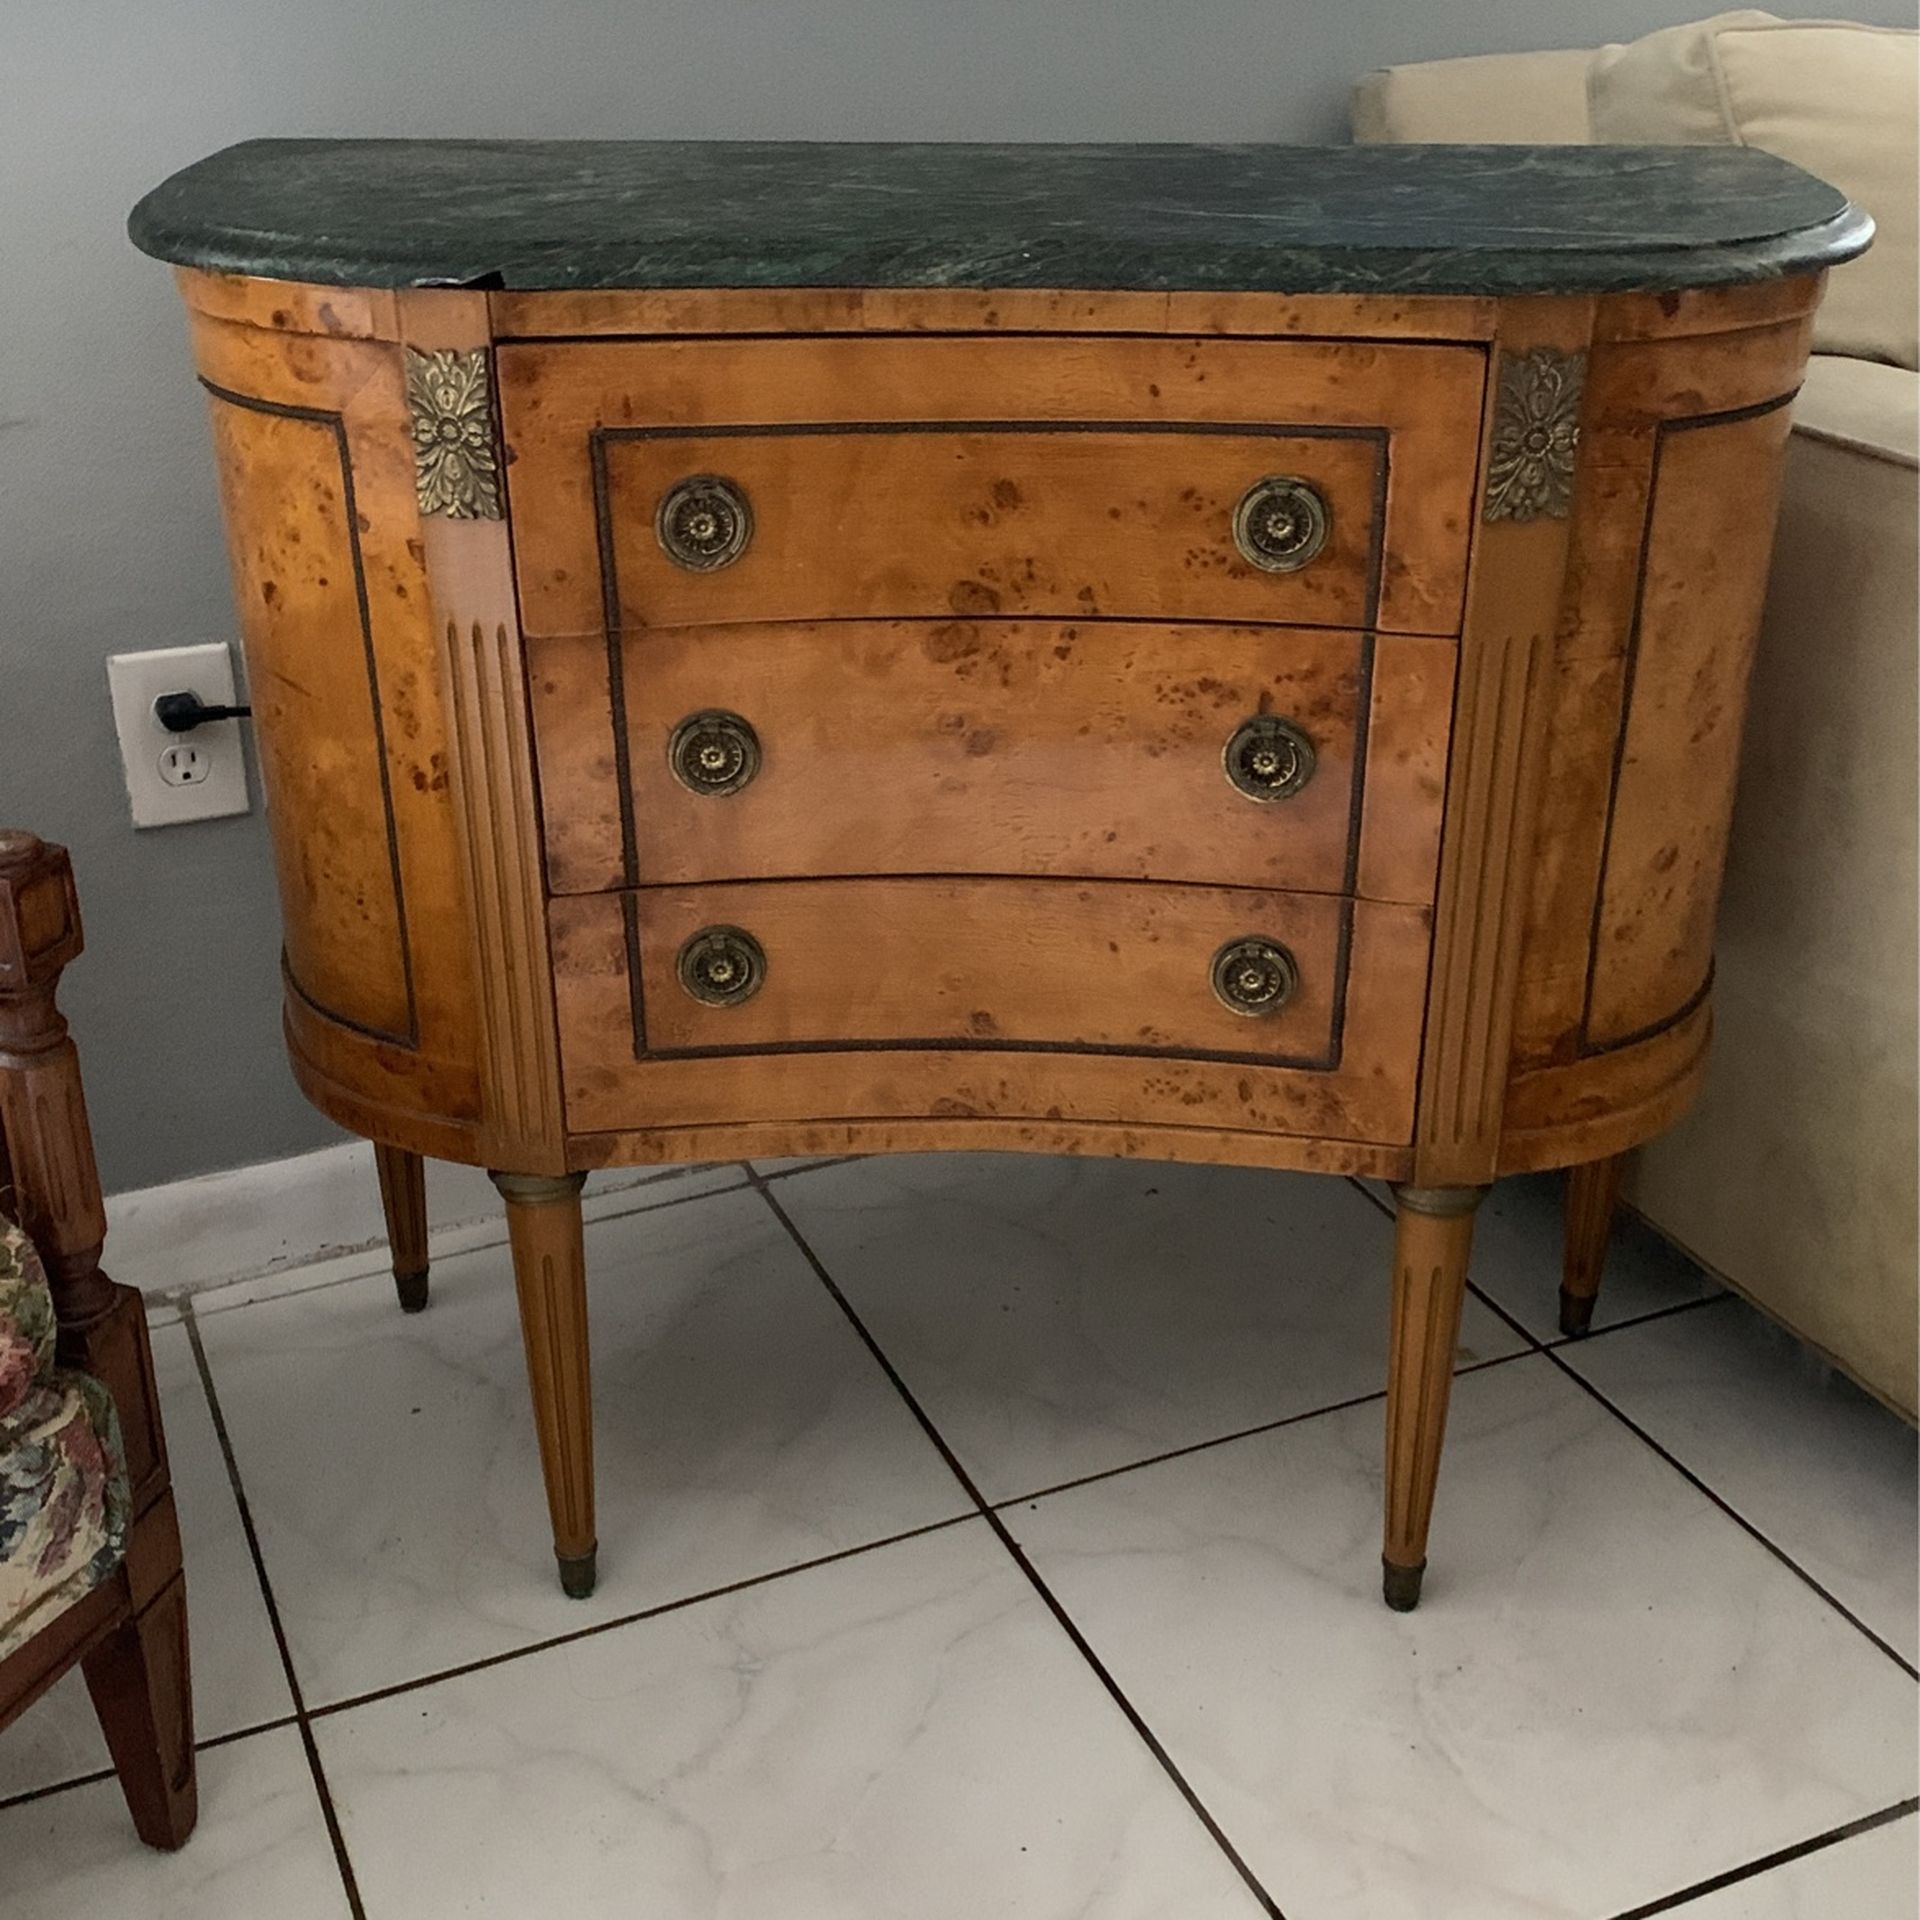 1 Vintage Burl Wood End Table, 3 Drawer Storage Organizer w/ Green Marble Top [Price Negotiable]